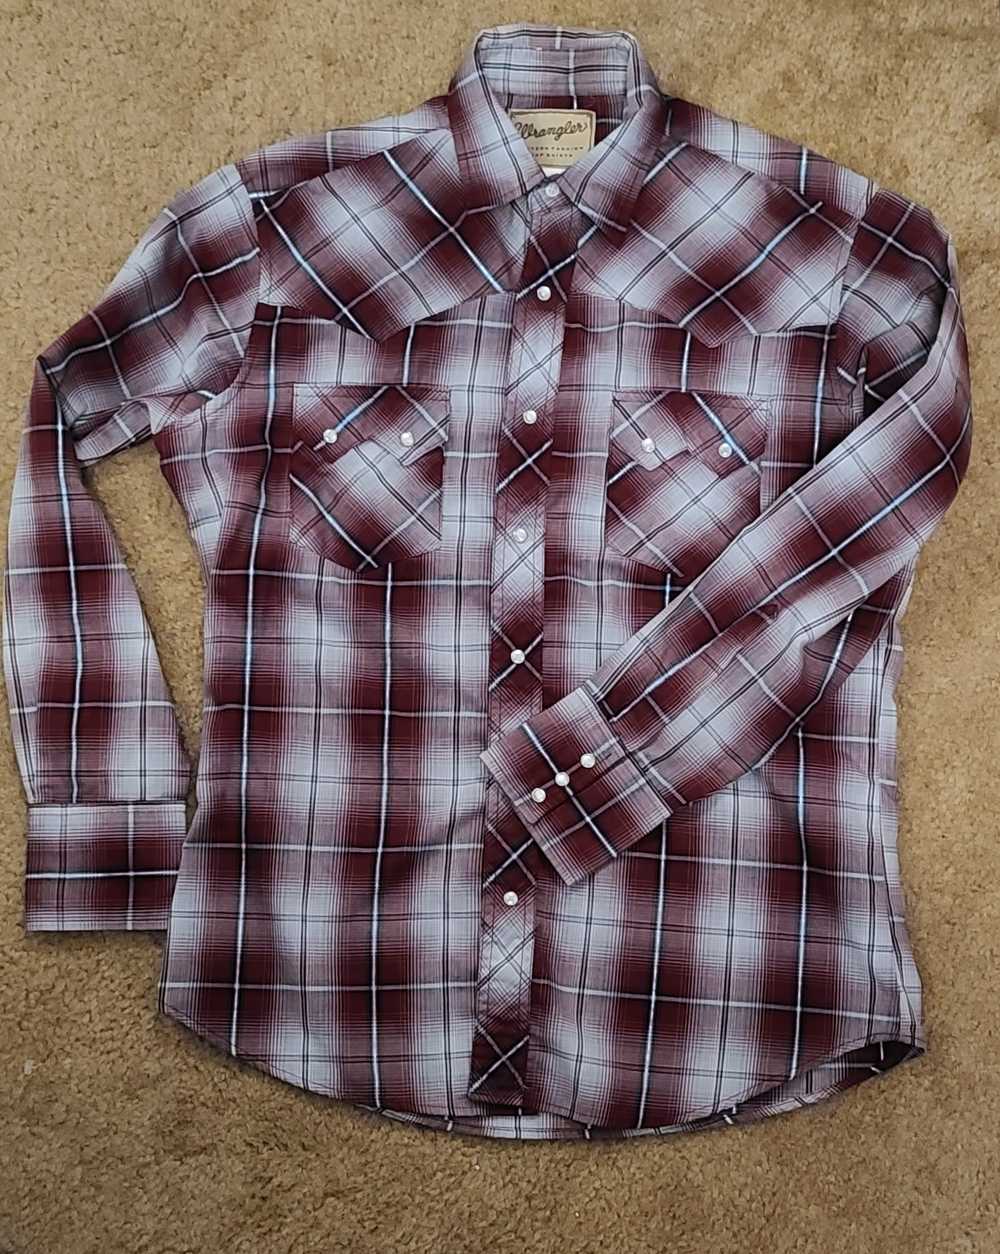 Vintage Wrangler long sleeve button up shirt - image 1